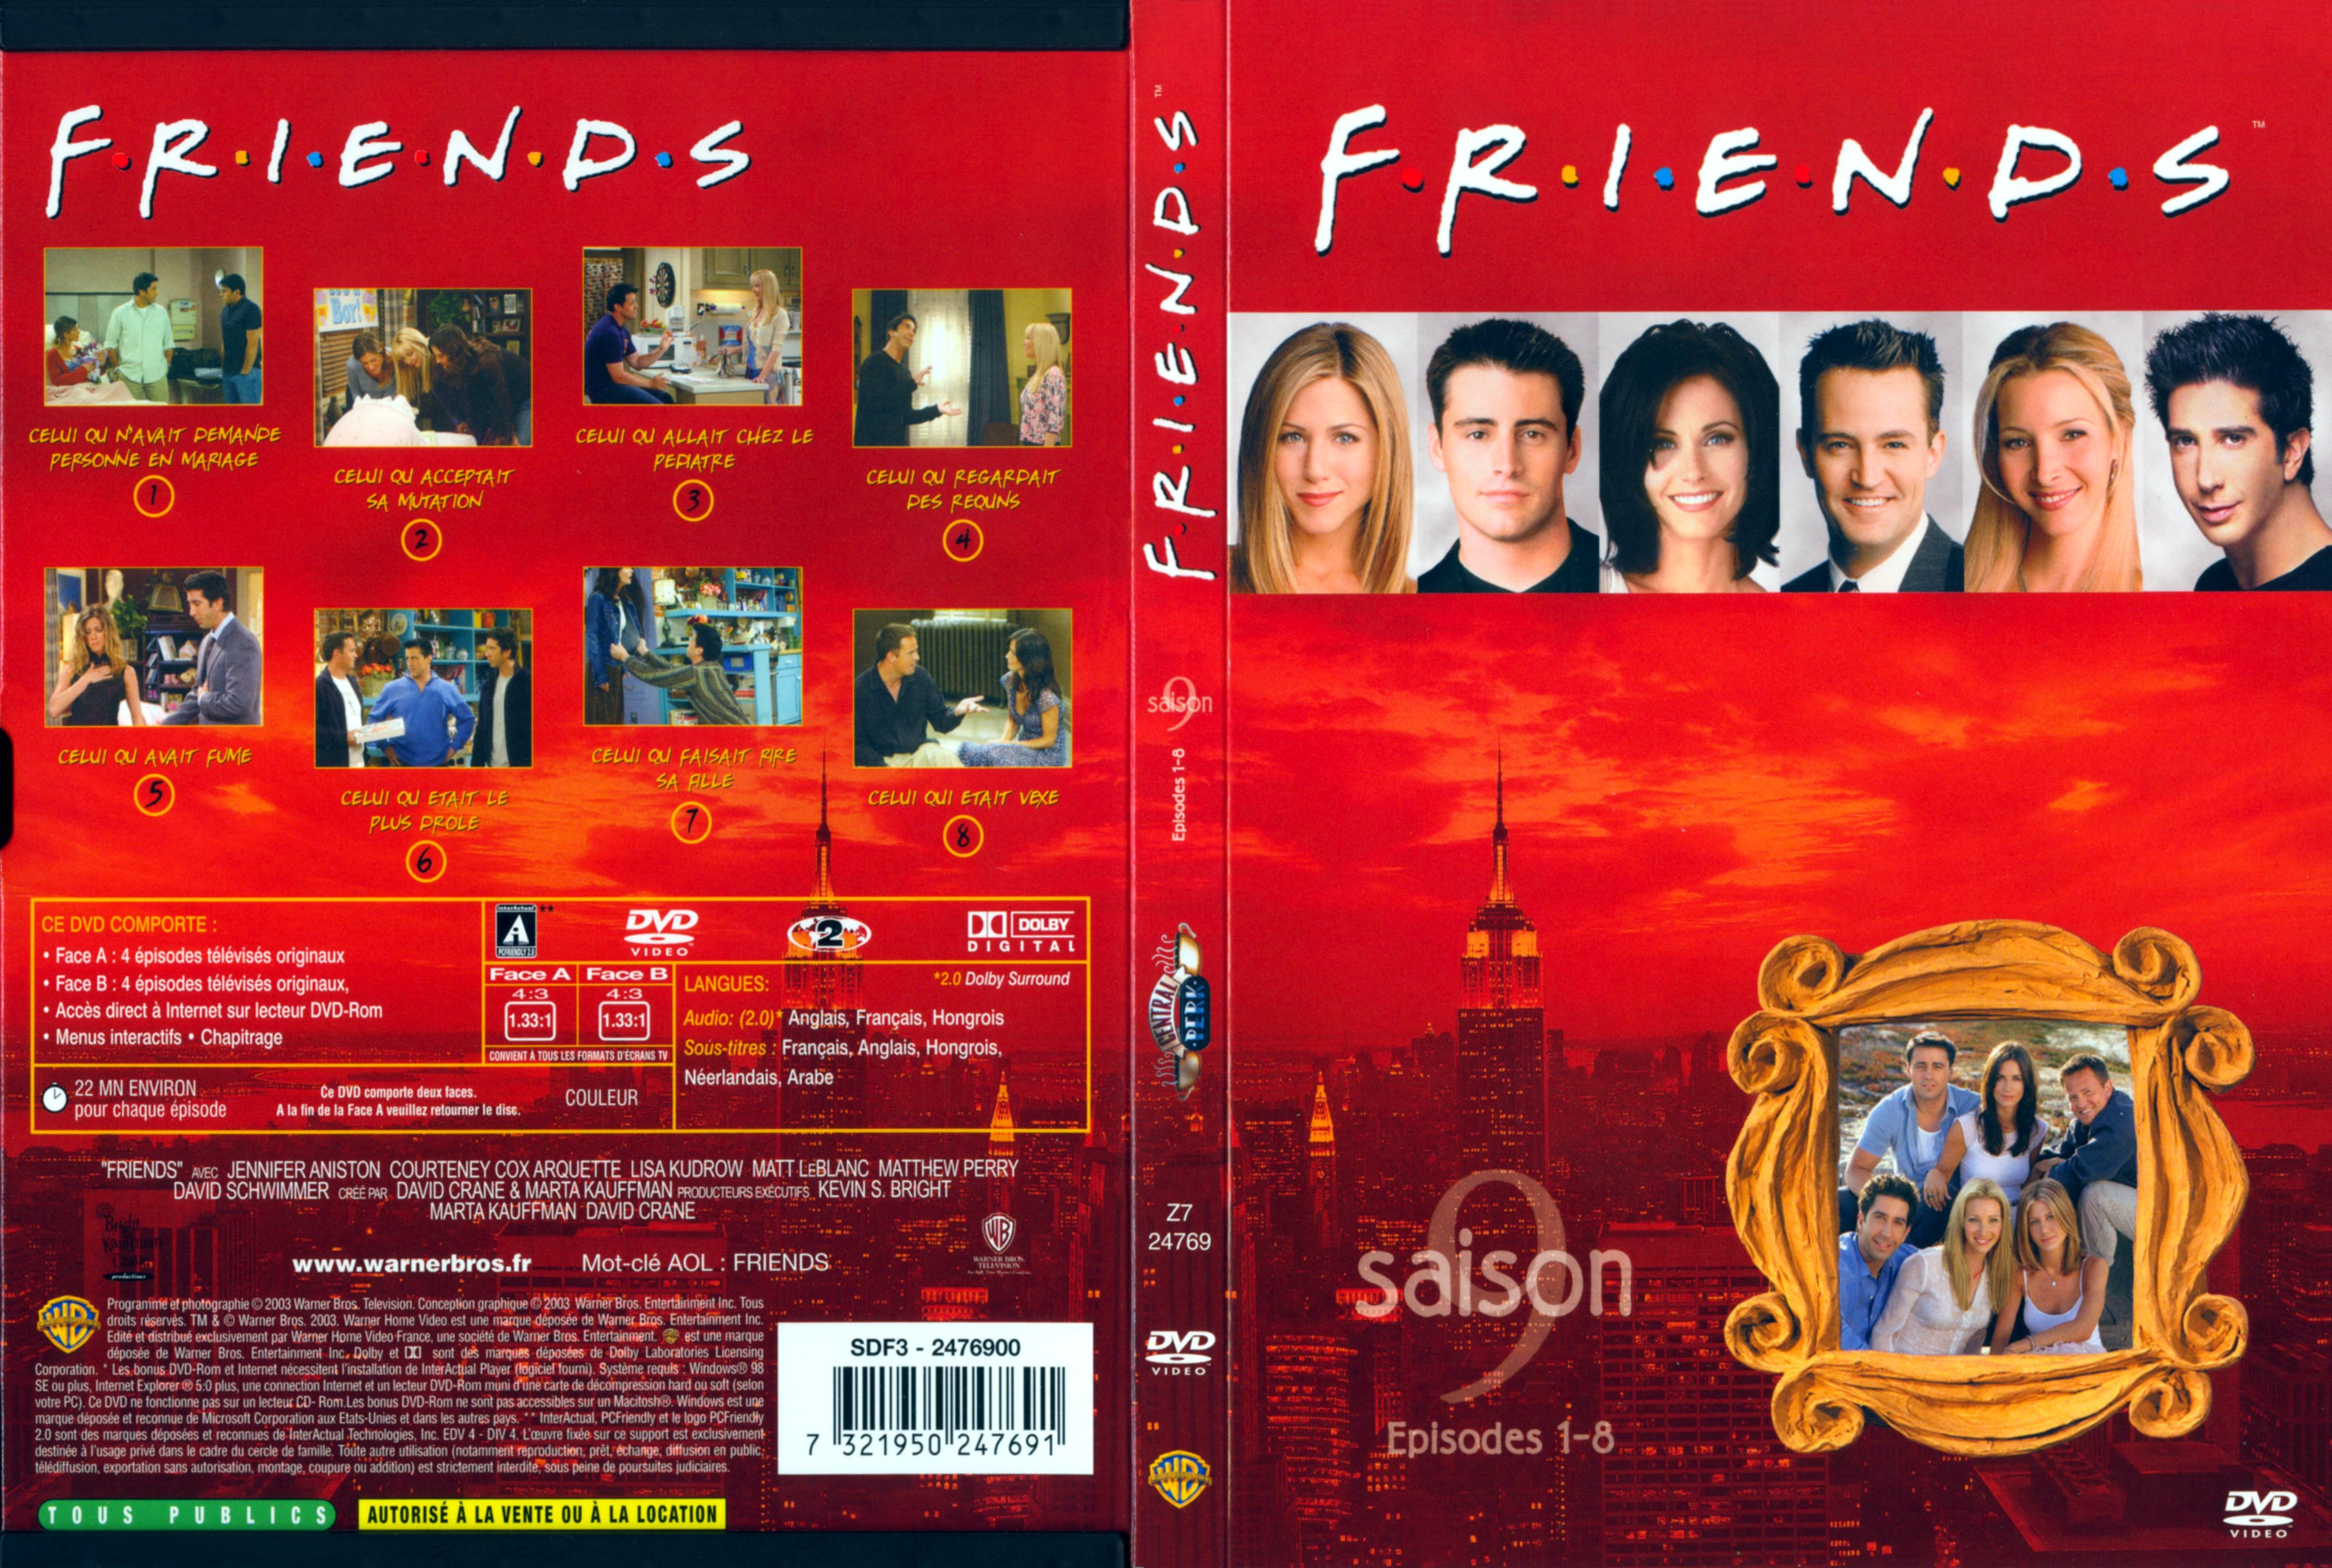 Jaquette DVD Friends saison 9 dvd 1